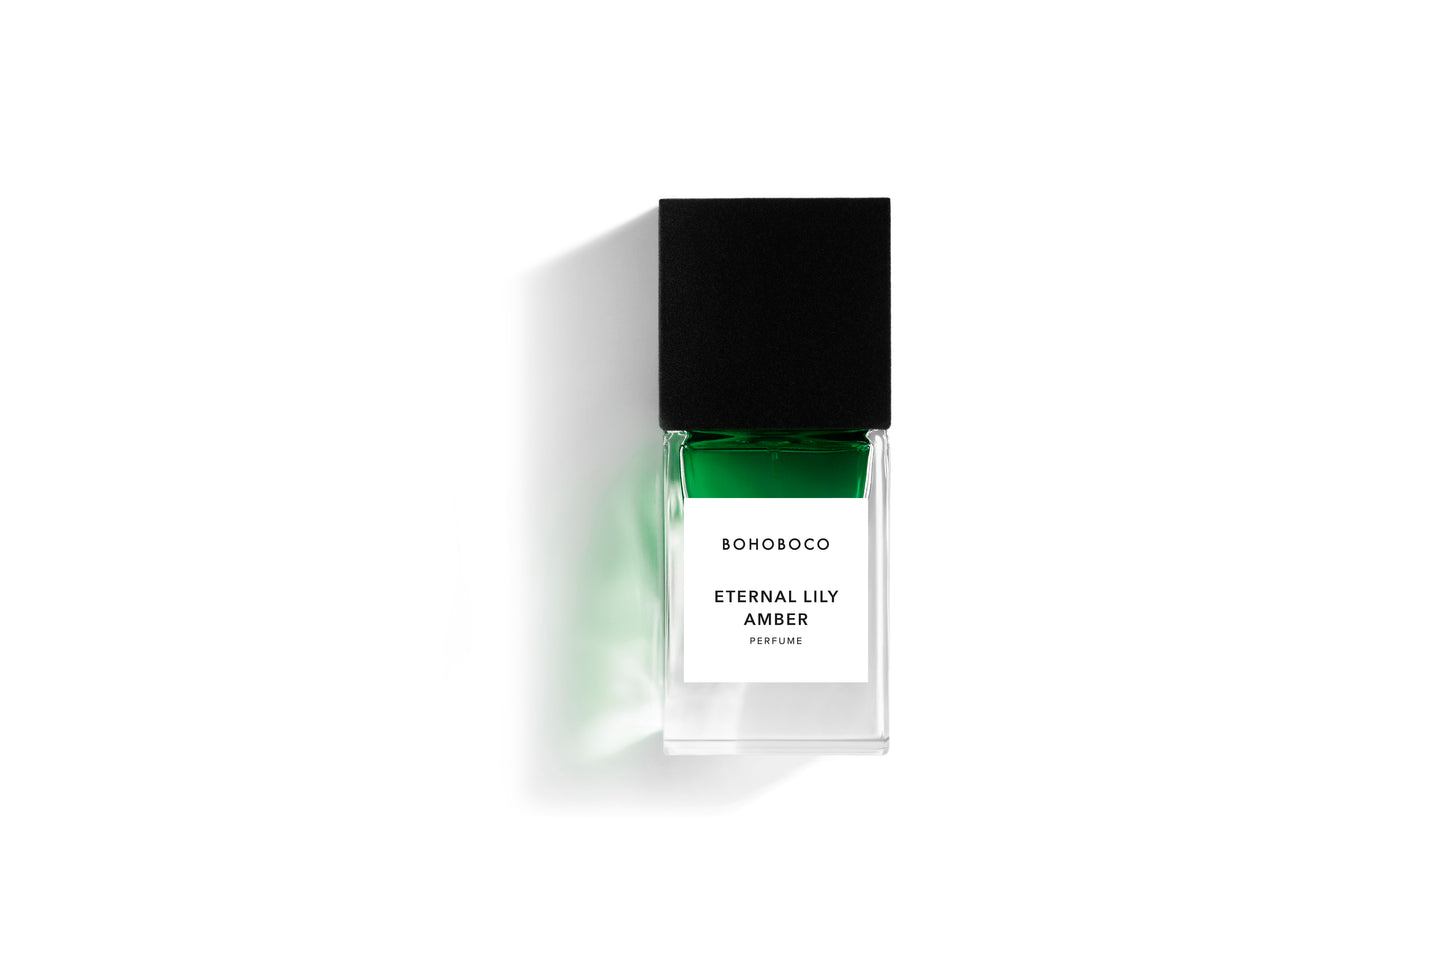 Eternal Lily & Amber Bohoboco Extrait de Parfum Sample 2ml